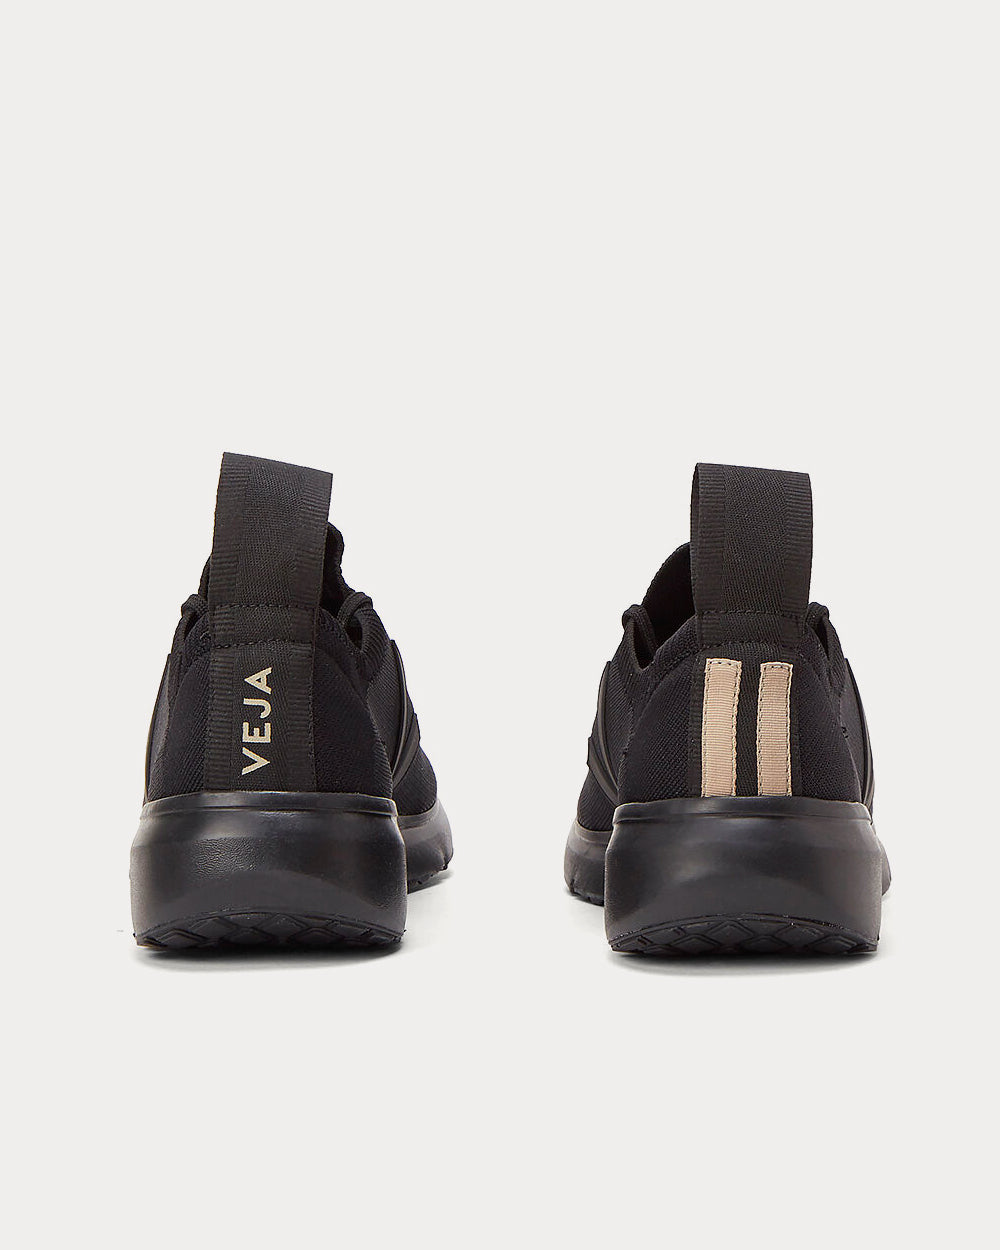 Veja x Rick Owens - Runner Style 2 V-Knit Black Low Top Sneakers